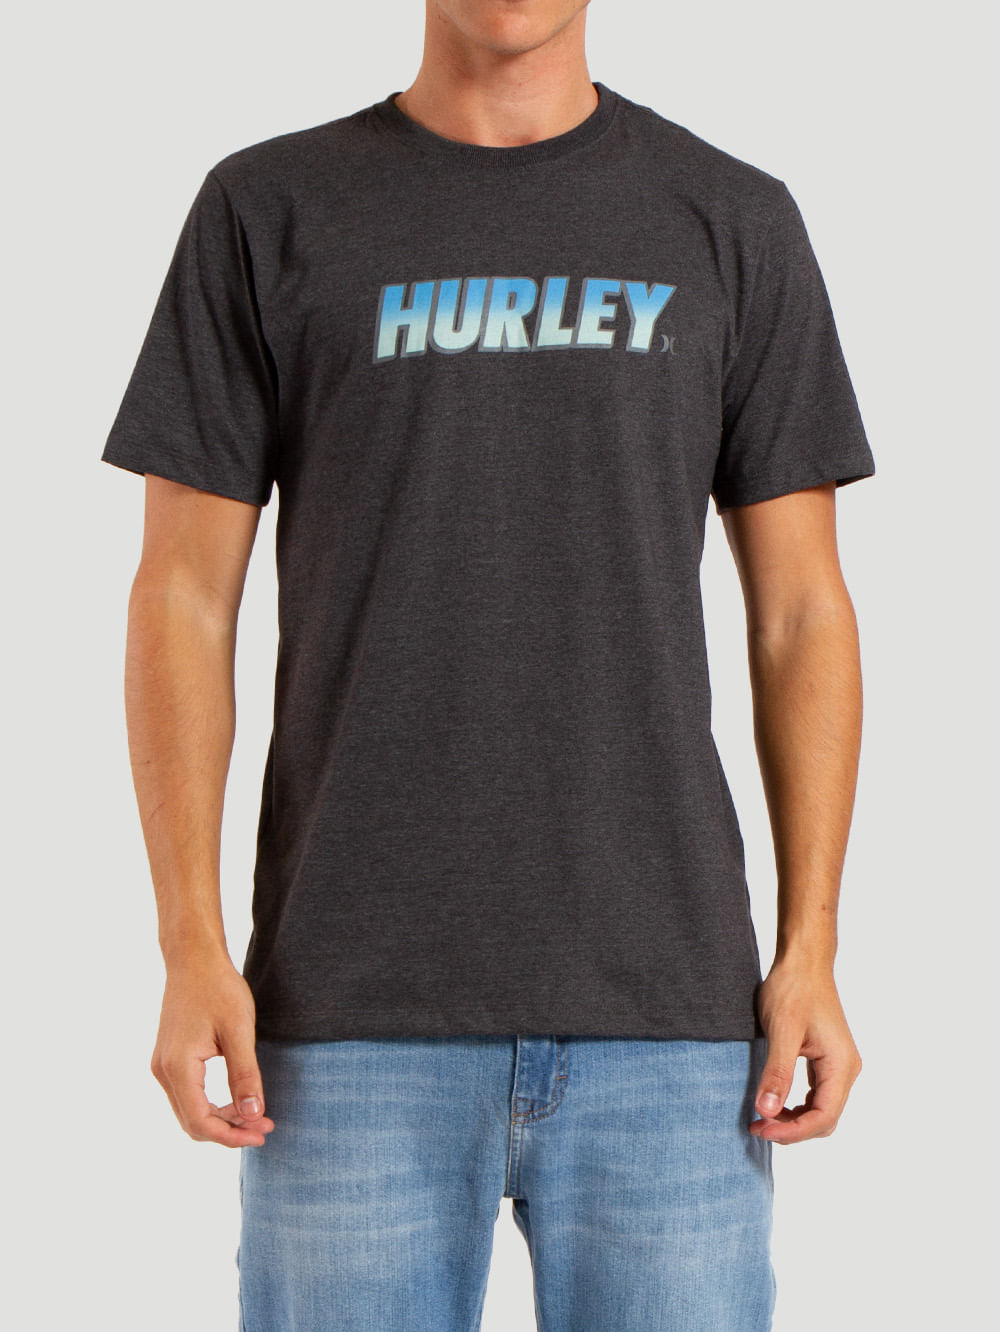 Camiseta Hurley Fastlane Mescla Preto